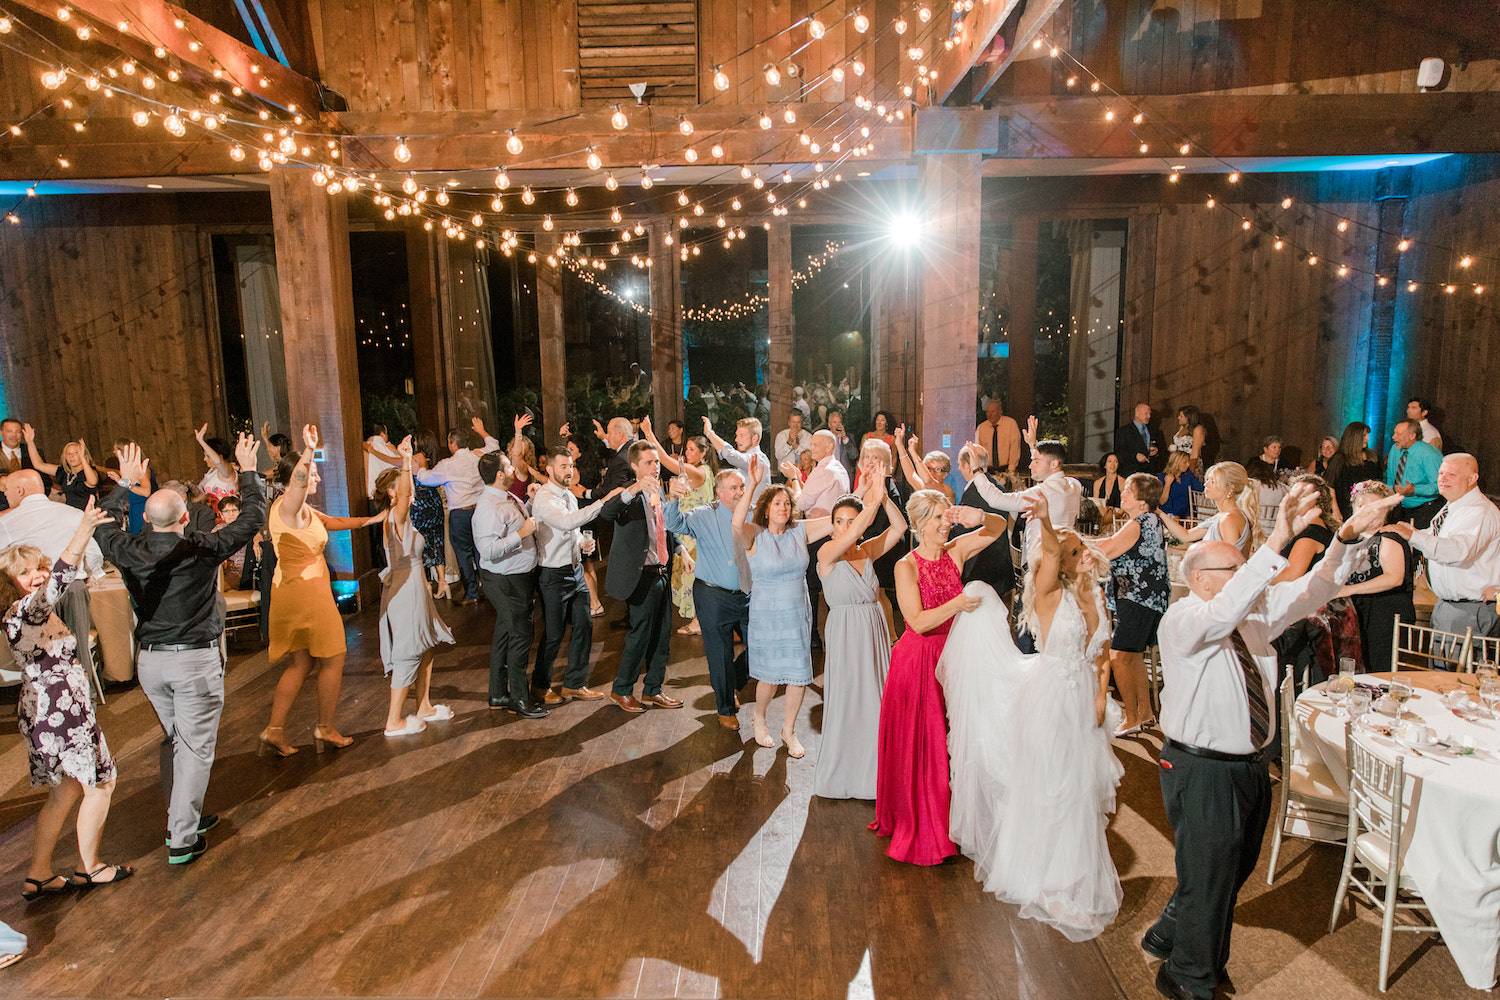 Best Group Line Dance Songs for Wedding rustic barn